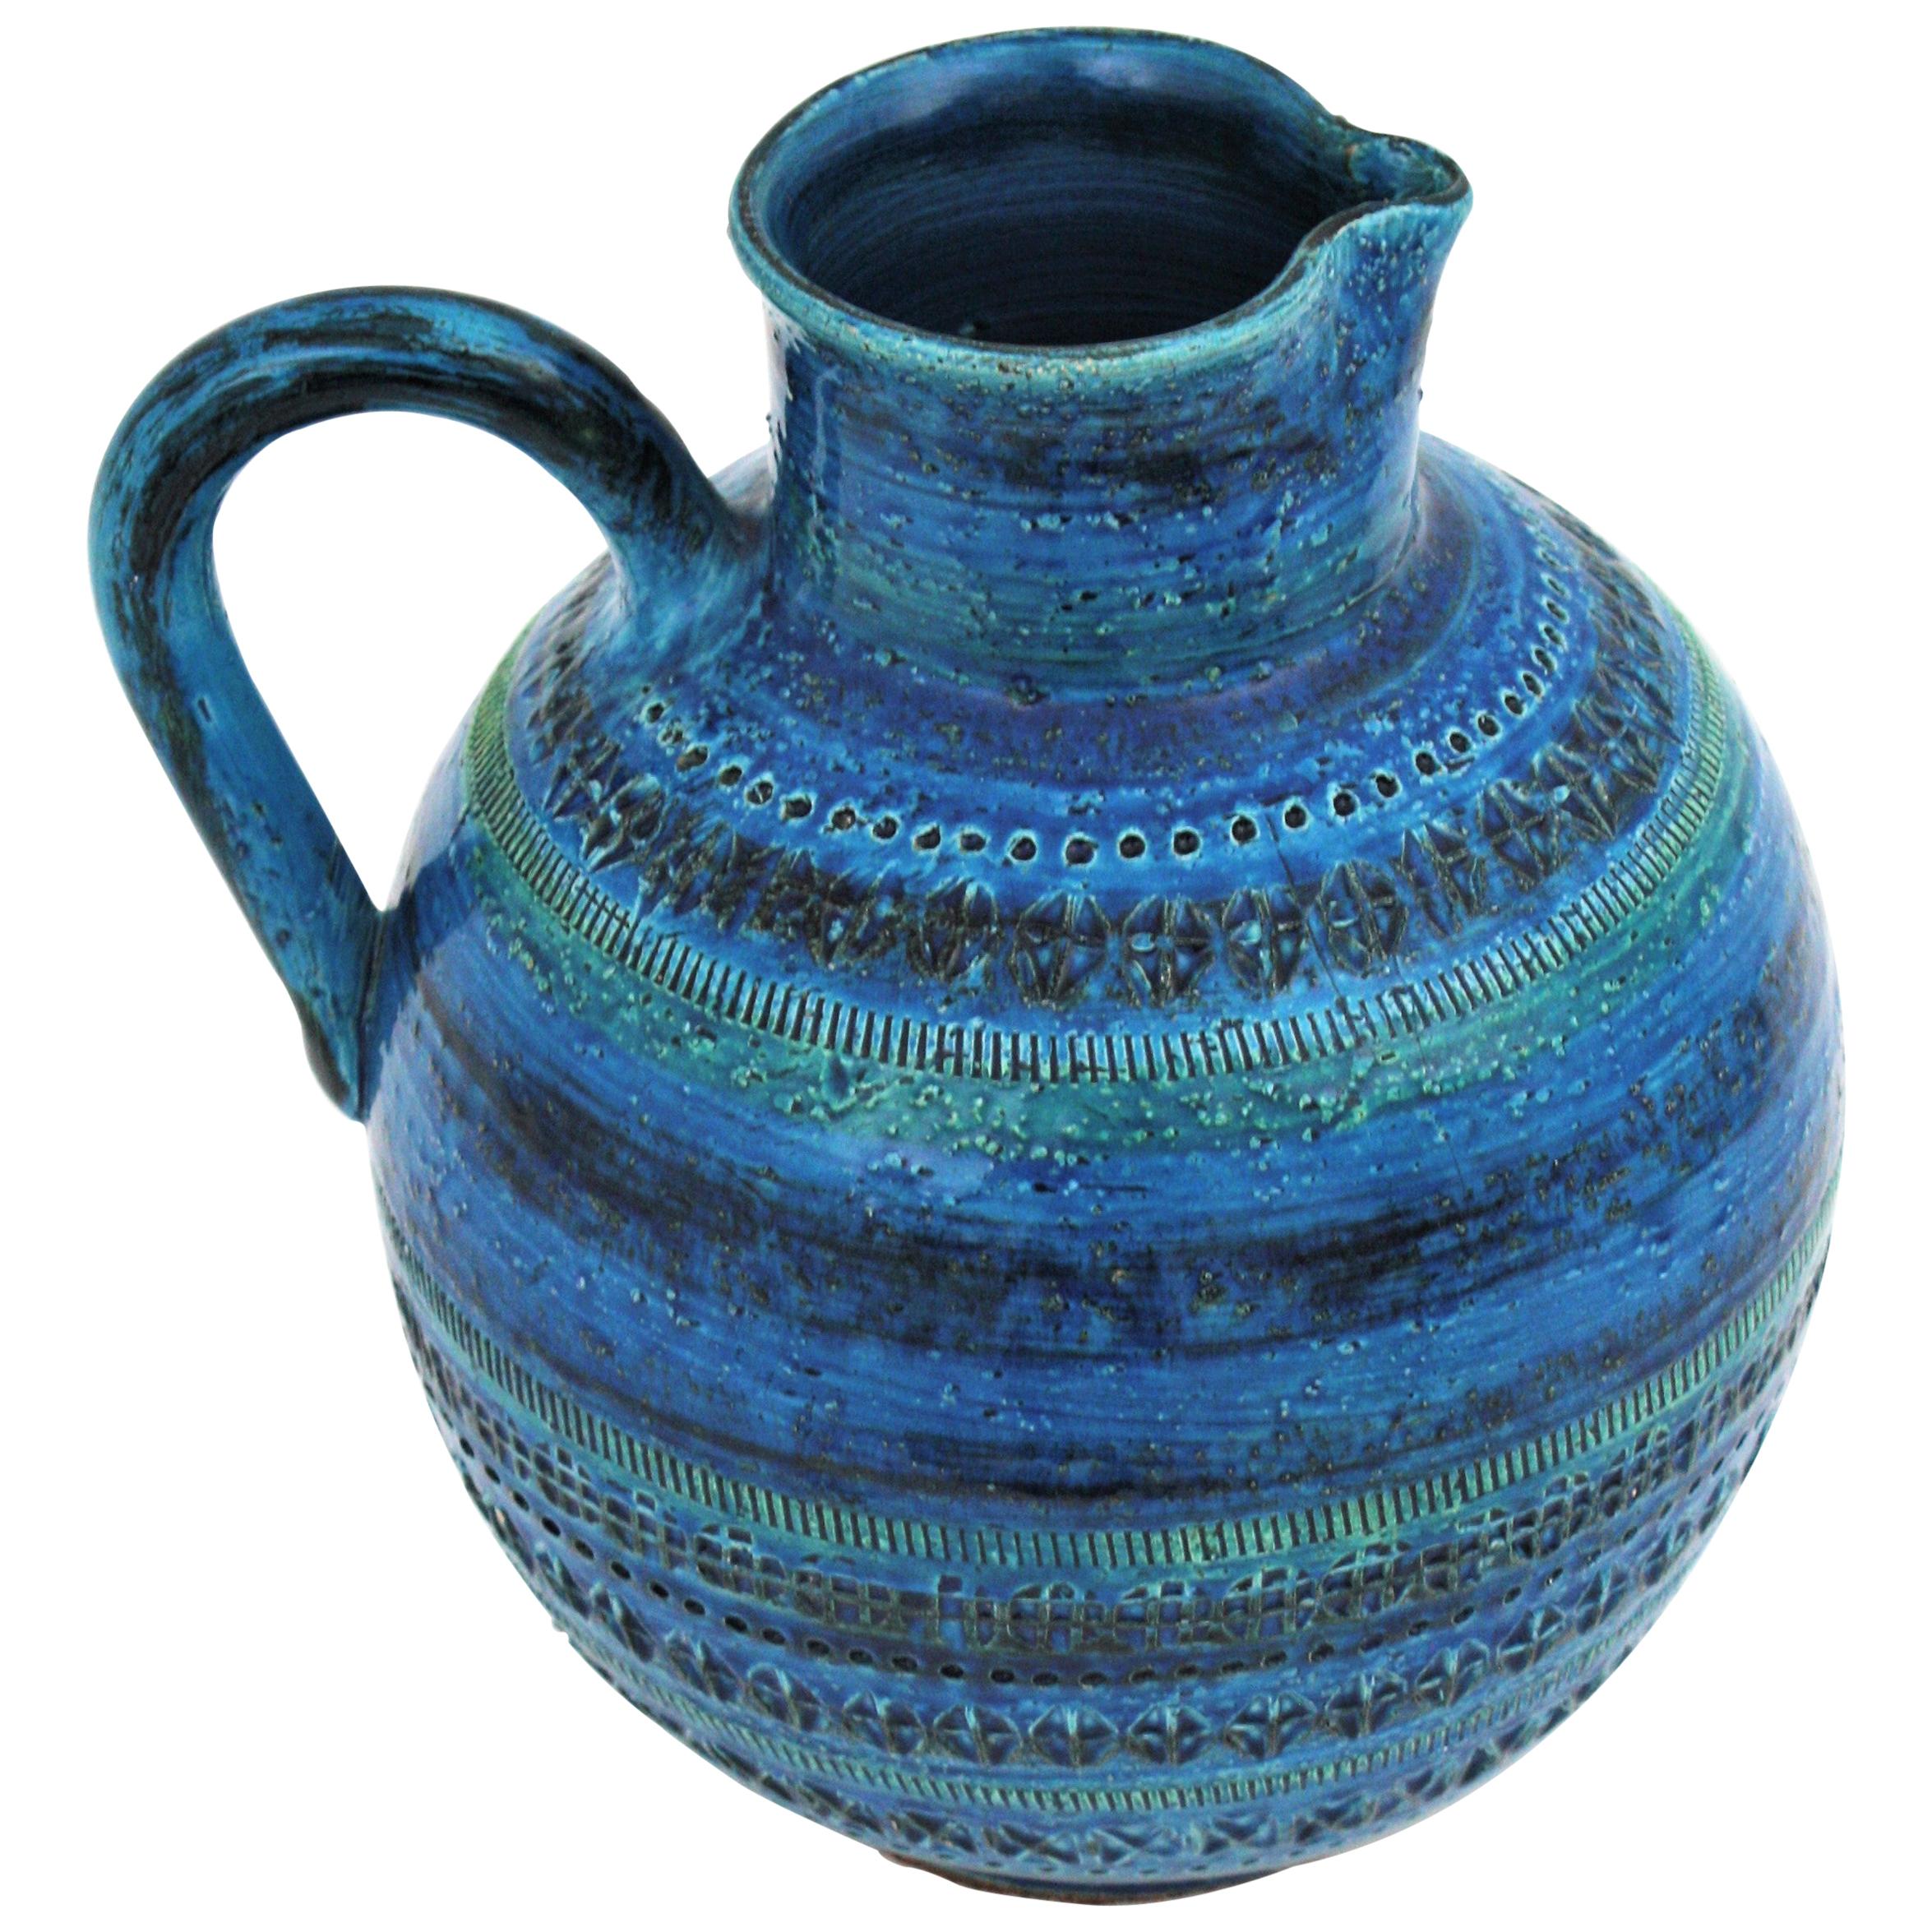 Aldo Londi Bitossi Rimini Blue Glazed Ceramic Oversized Jug Vase